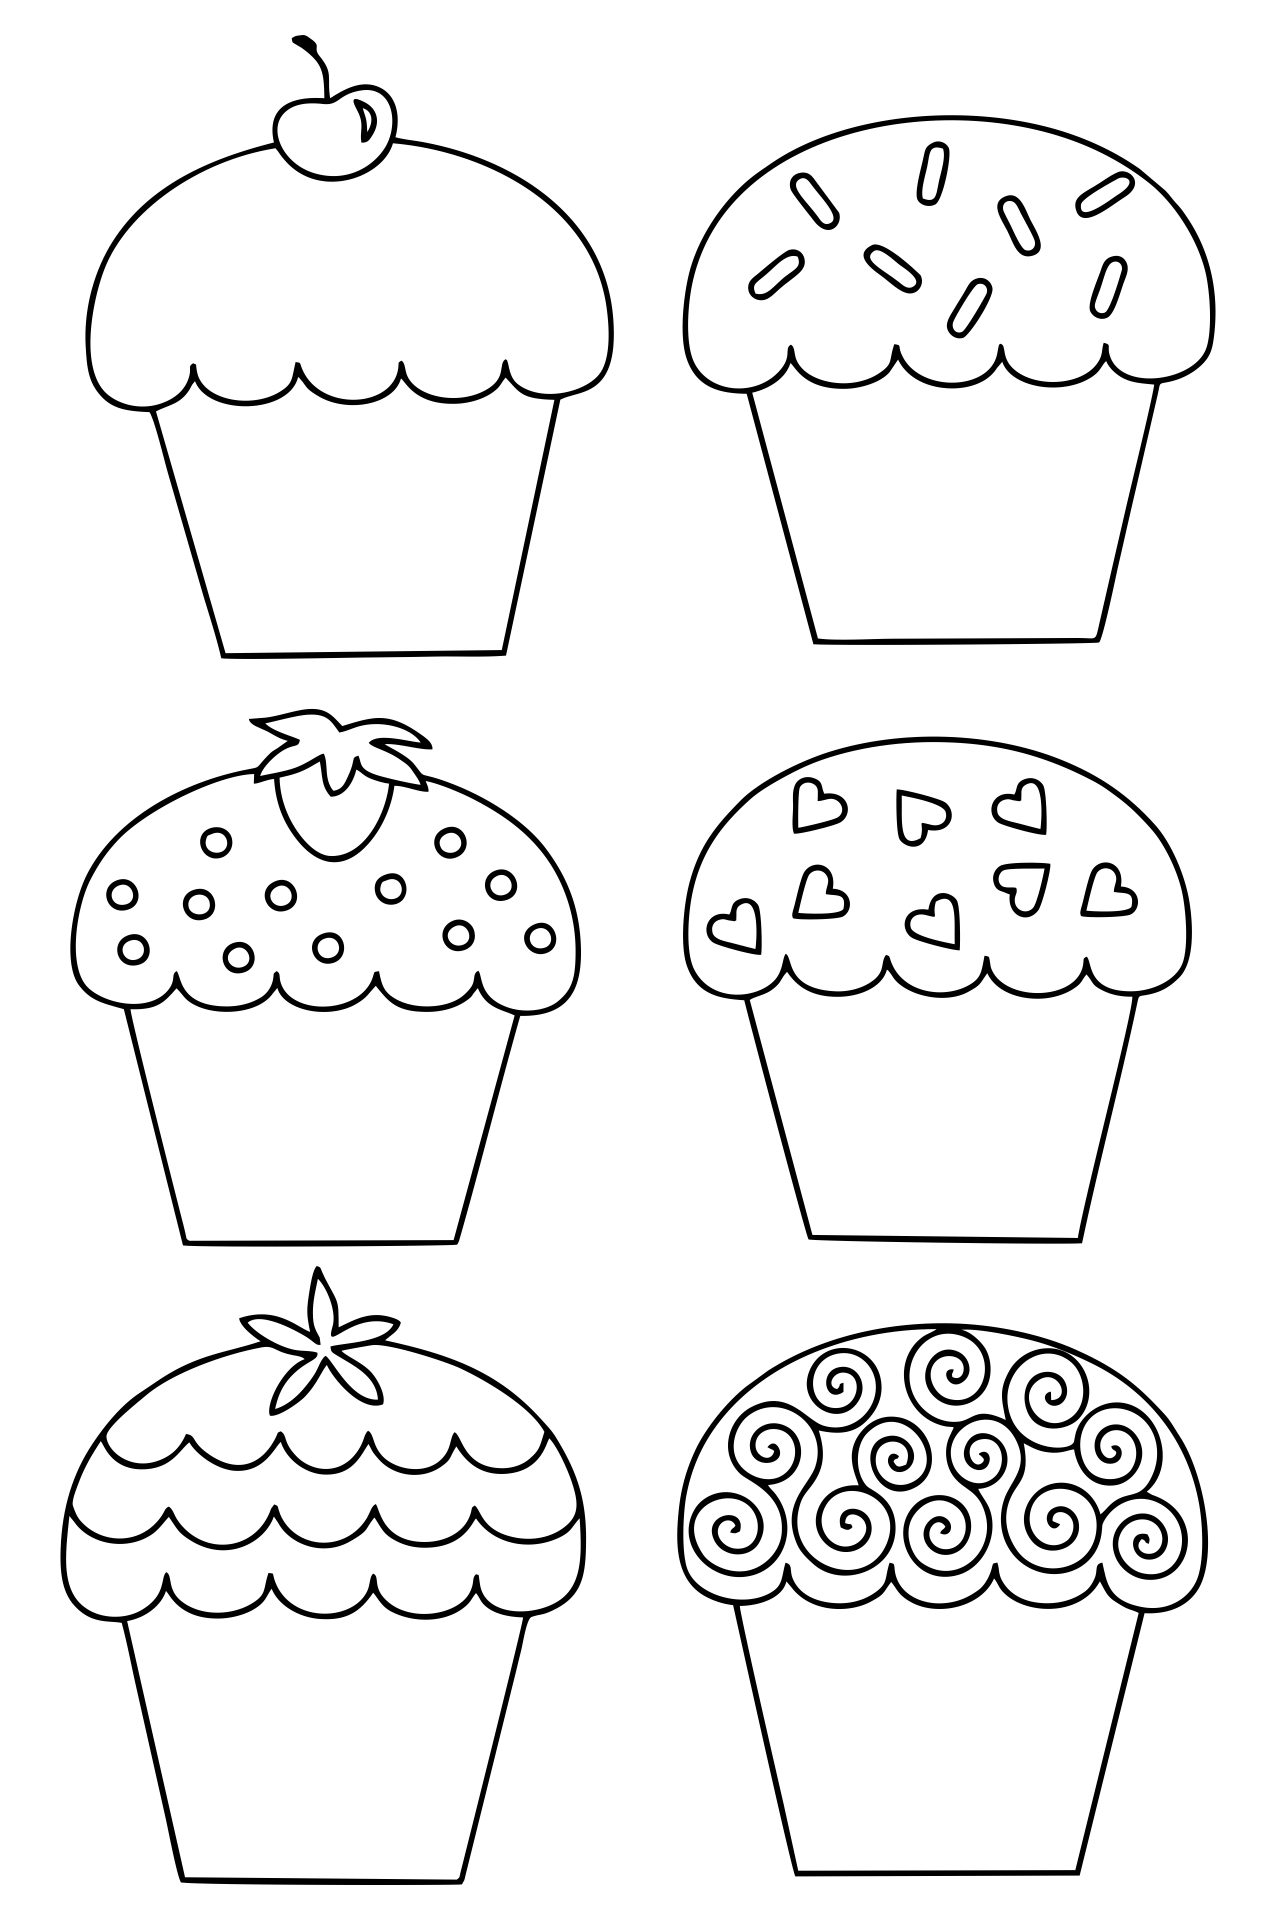 cupcake-printable-template